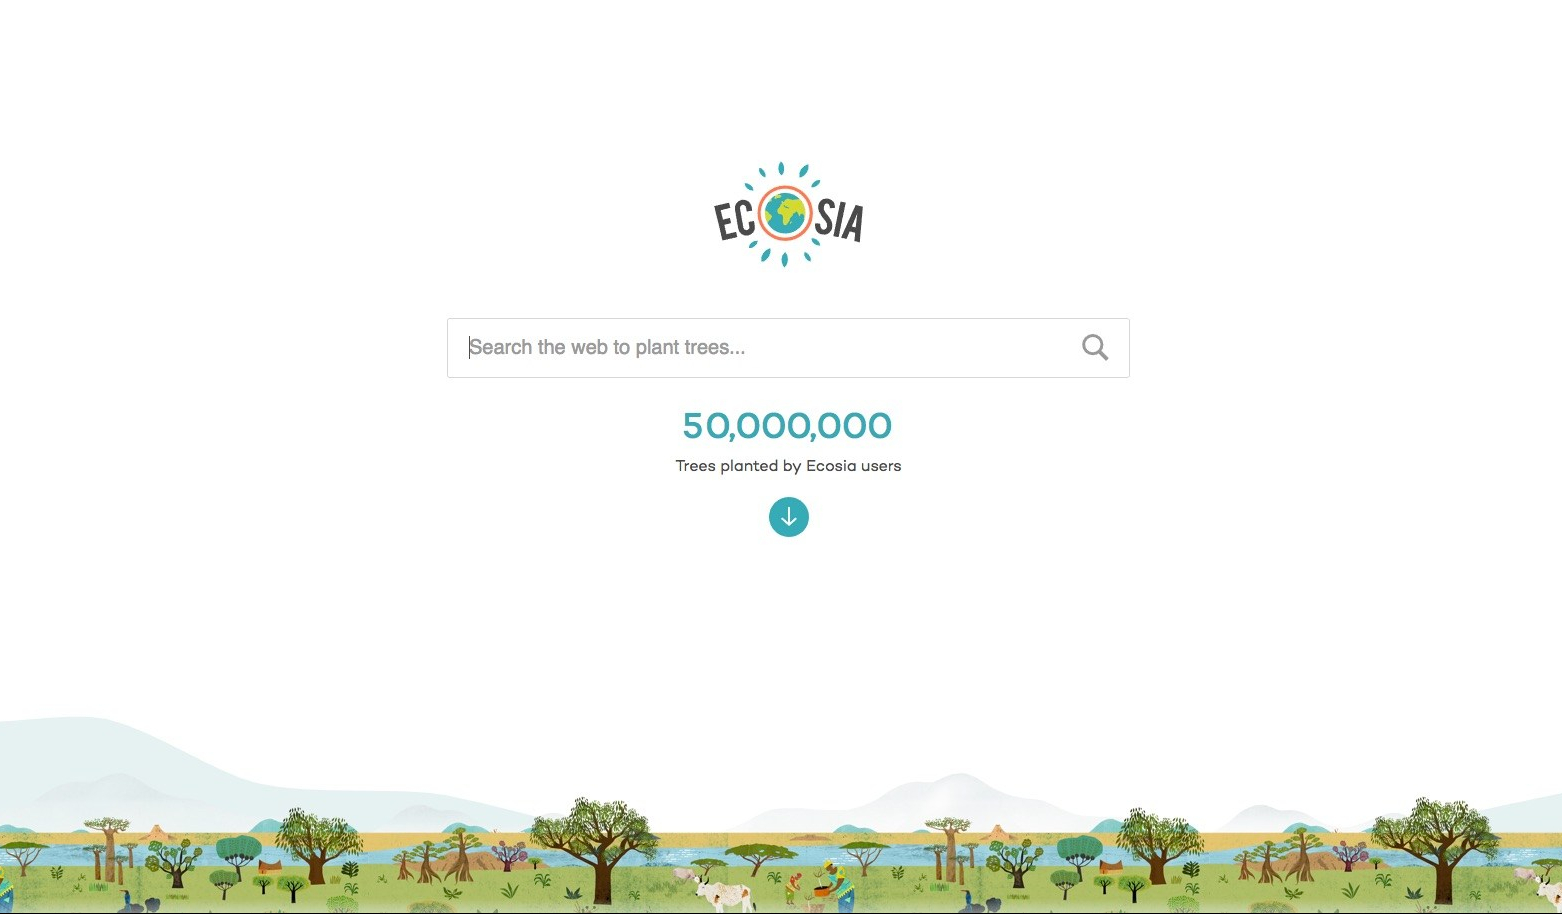 ecosia search engine homepage, ecosia planted 50,000,000 trees